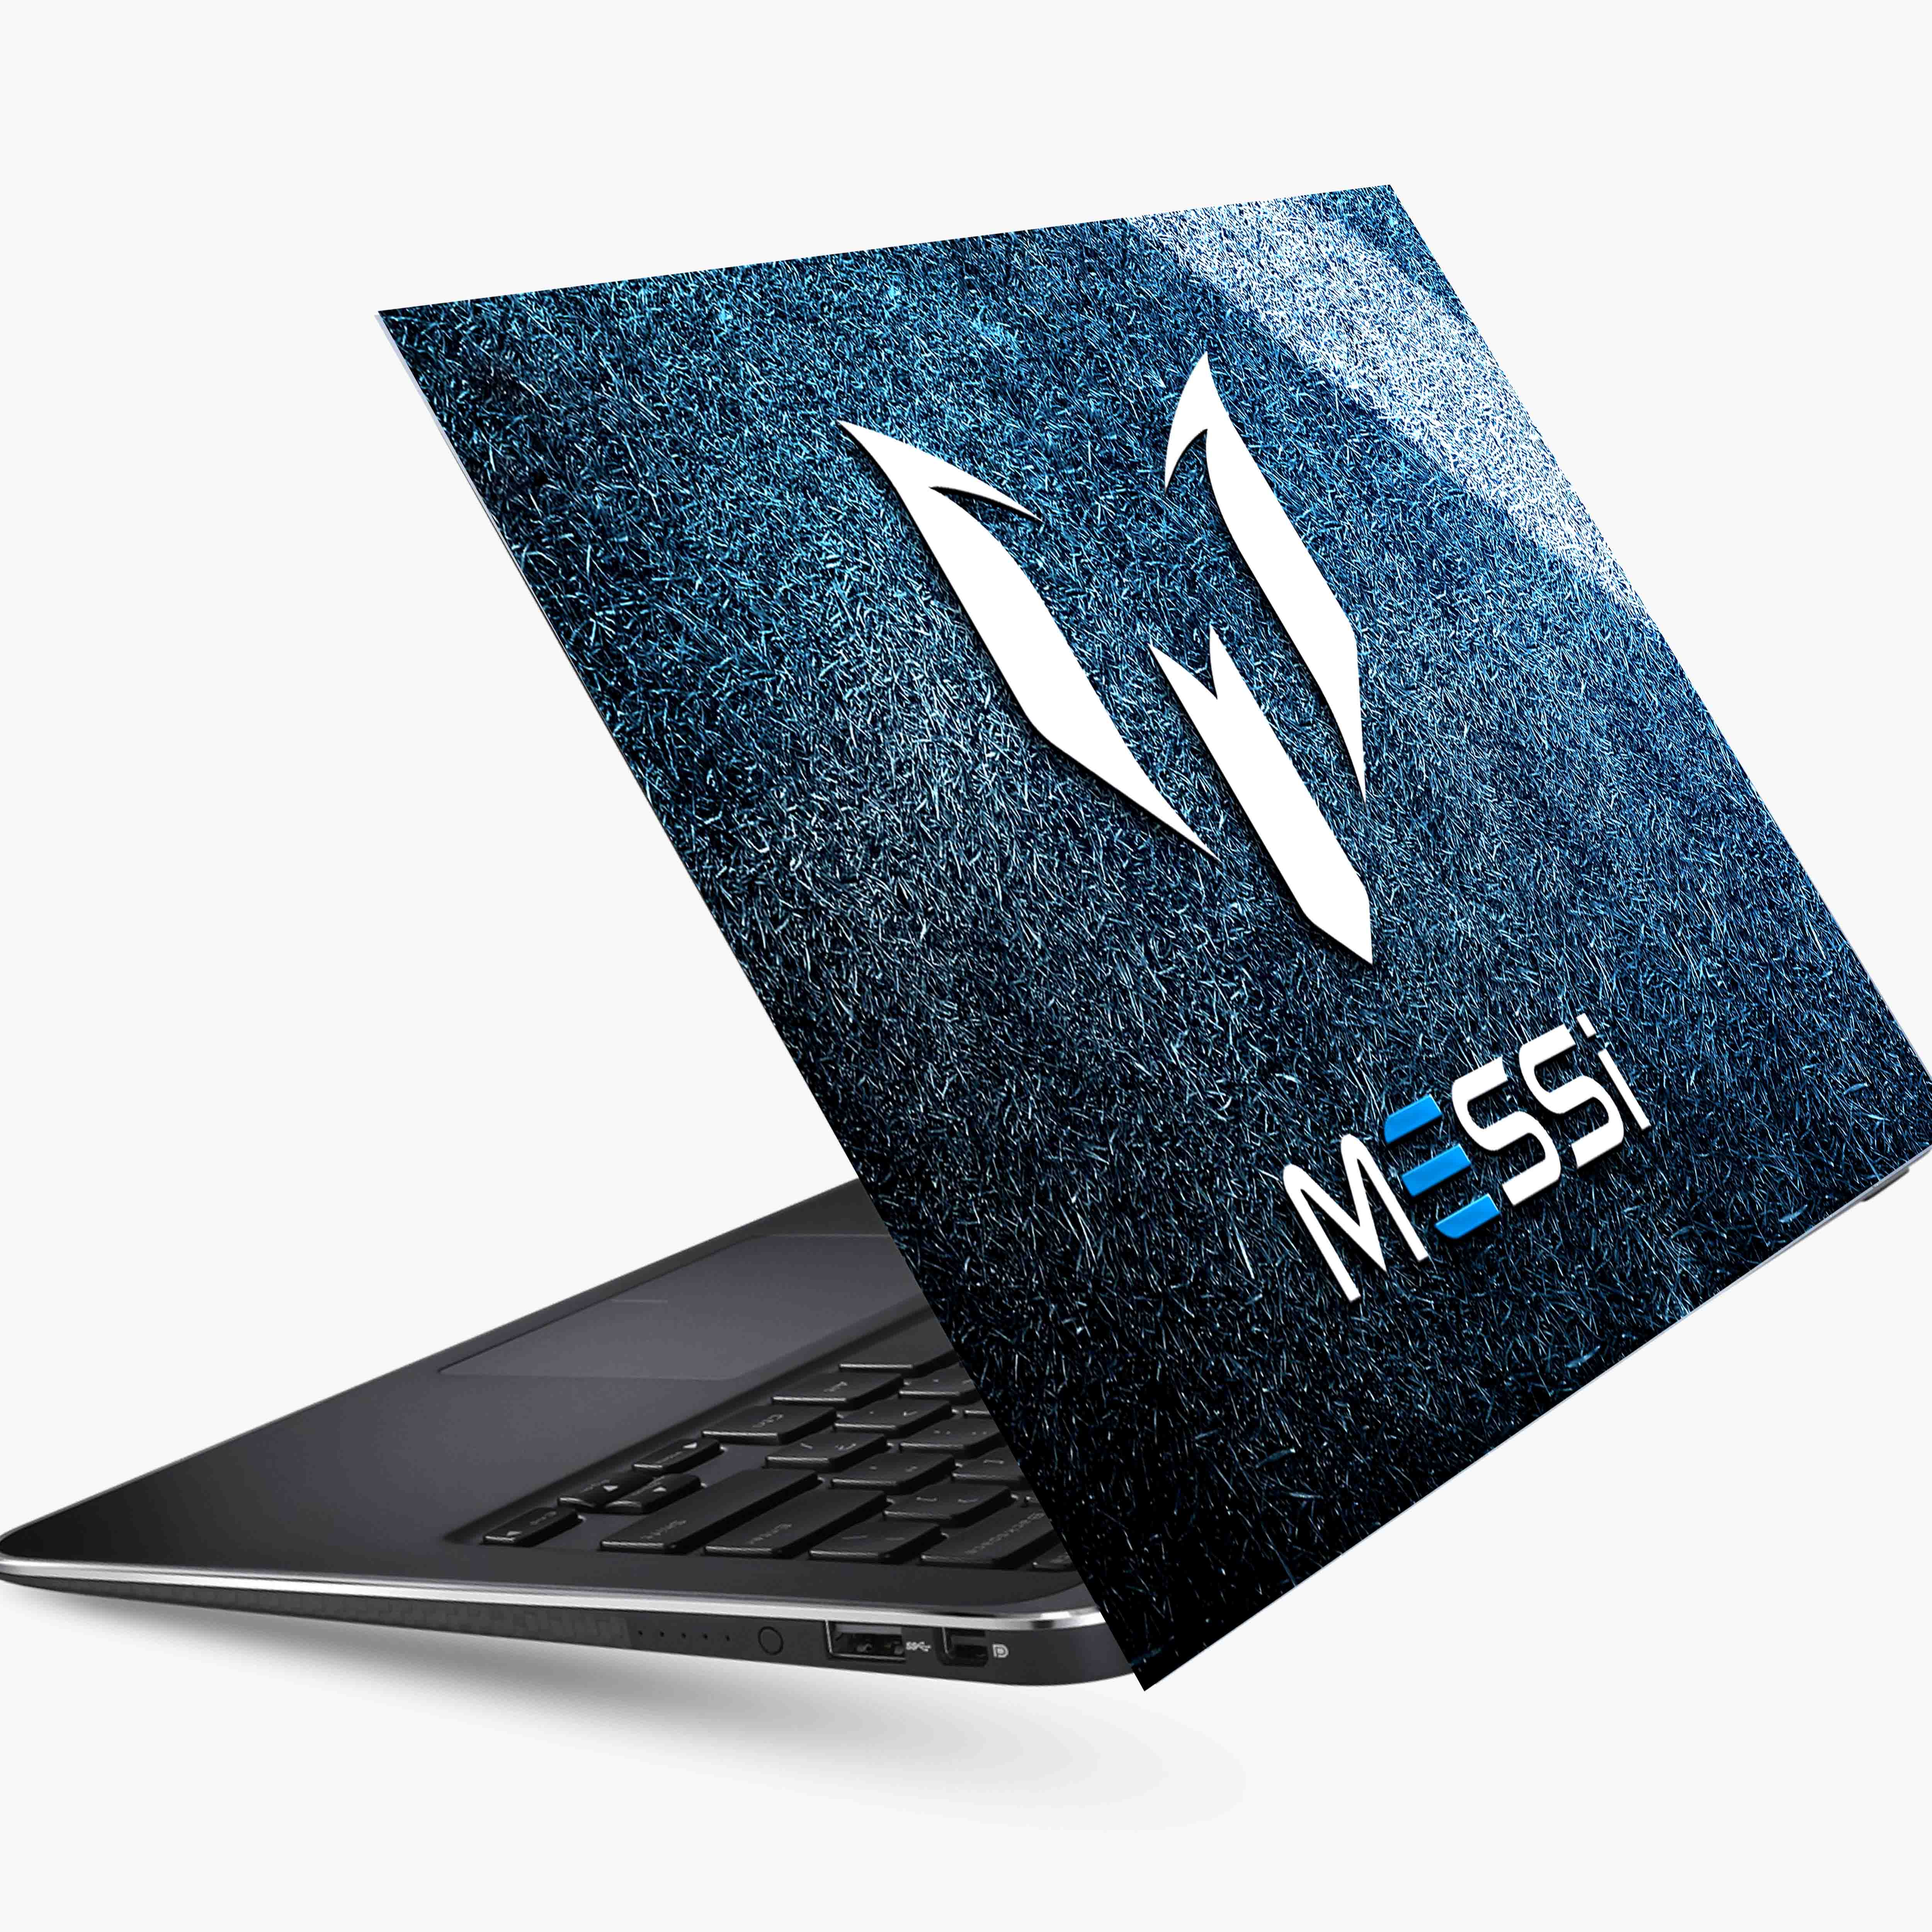 Messi Skin Sticker laptop background design for (15.6/14 inch)